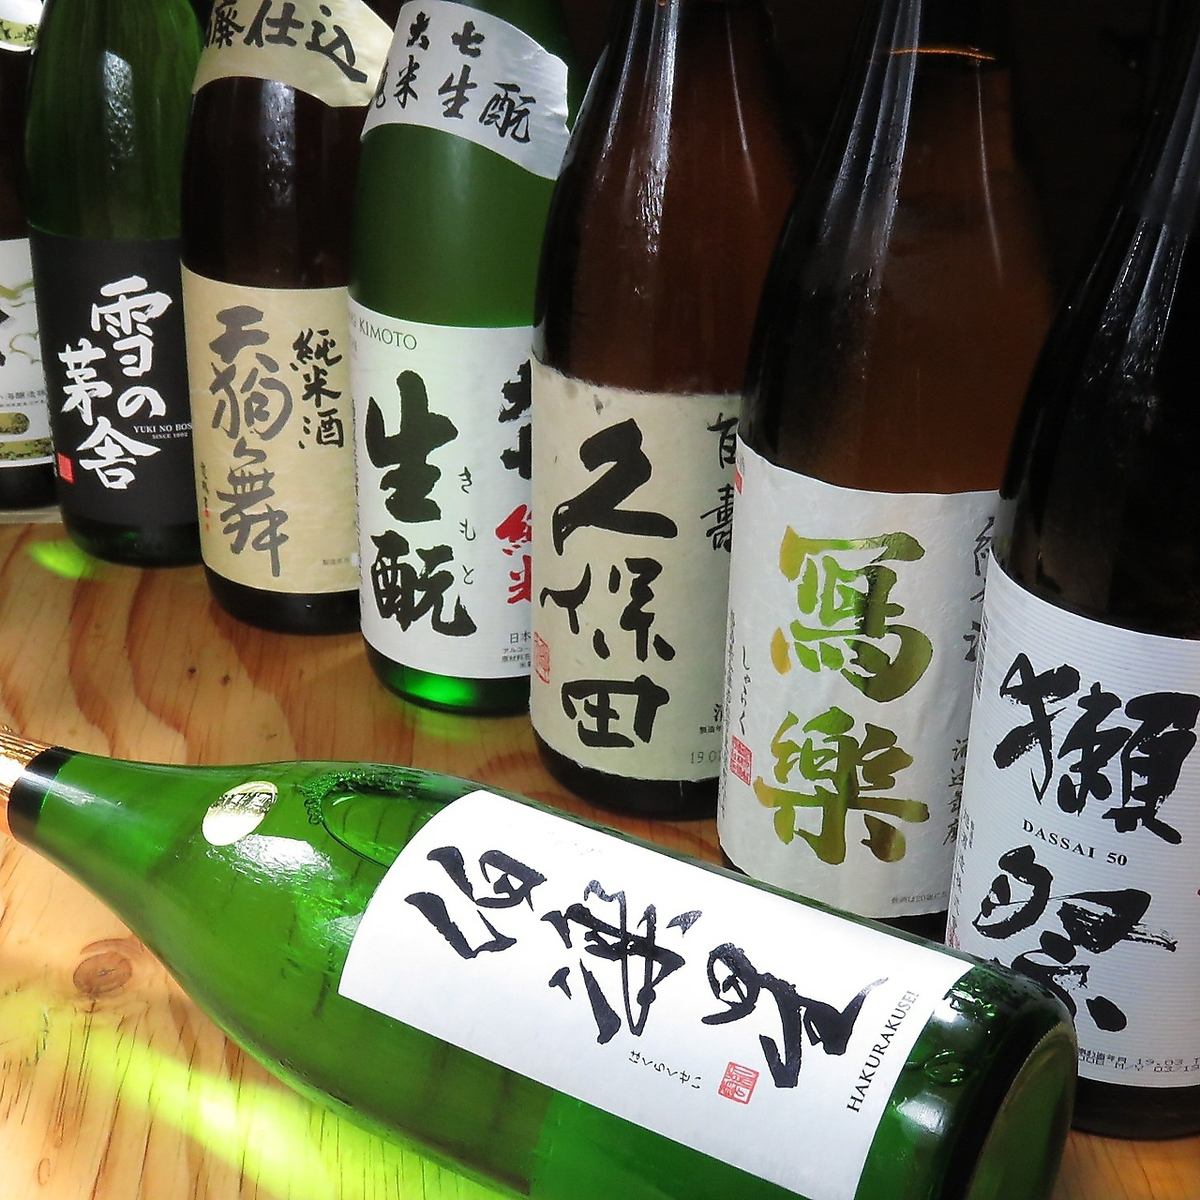 Dassai, Hakurakusei, Shagaraku, etc. We have a wide selection of about 30 types of sake!